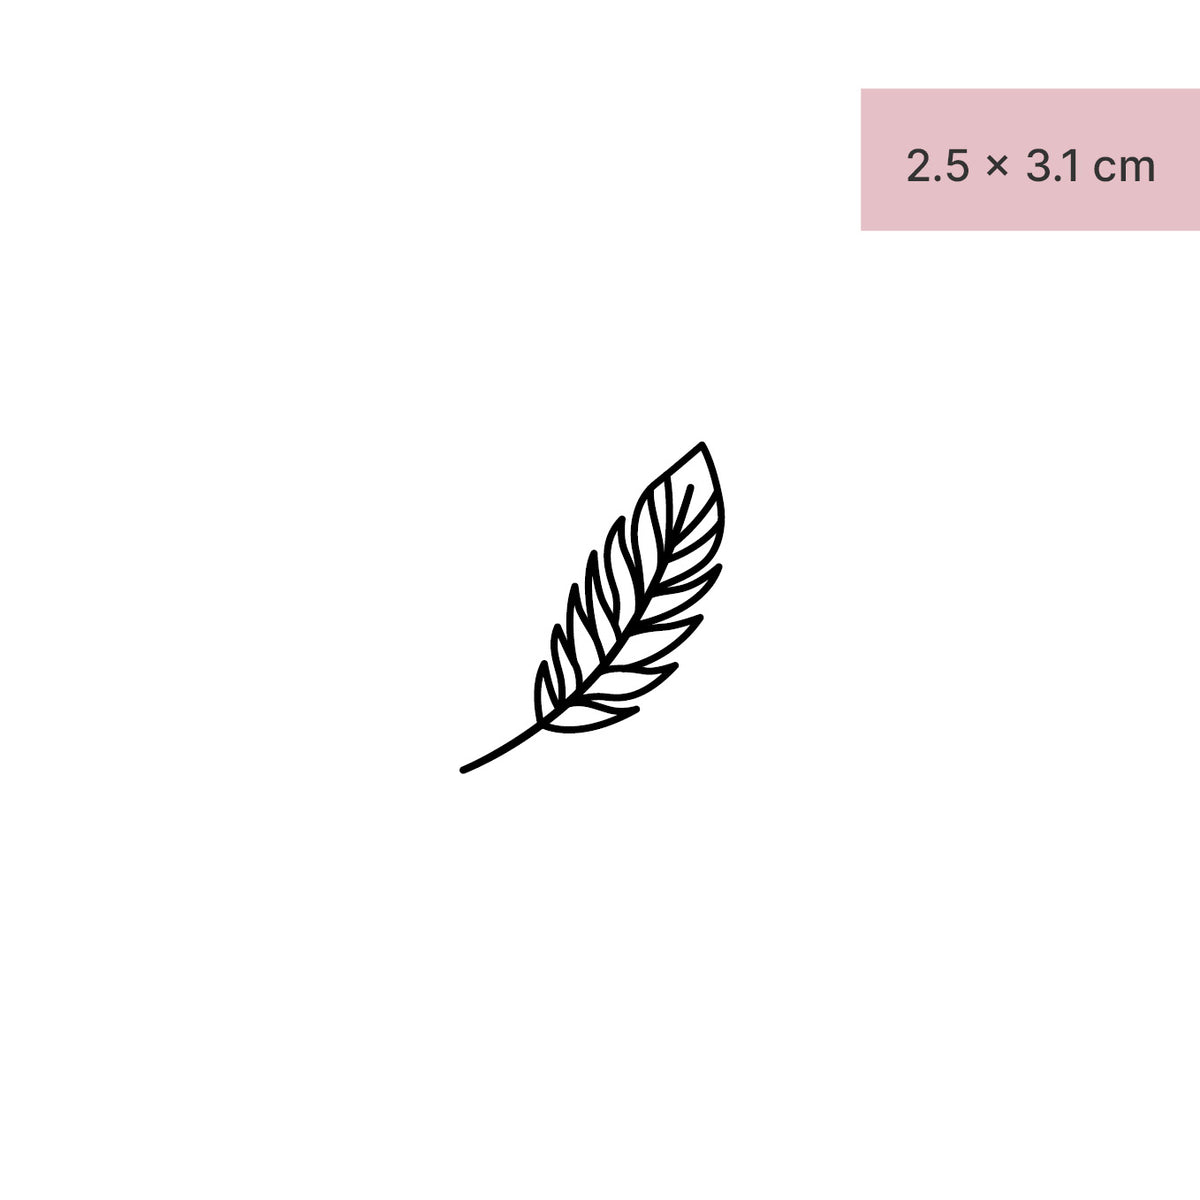 Feather tattoo stock vector. Illustration of pattern - 58667992